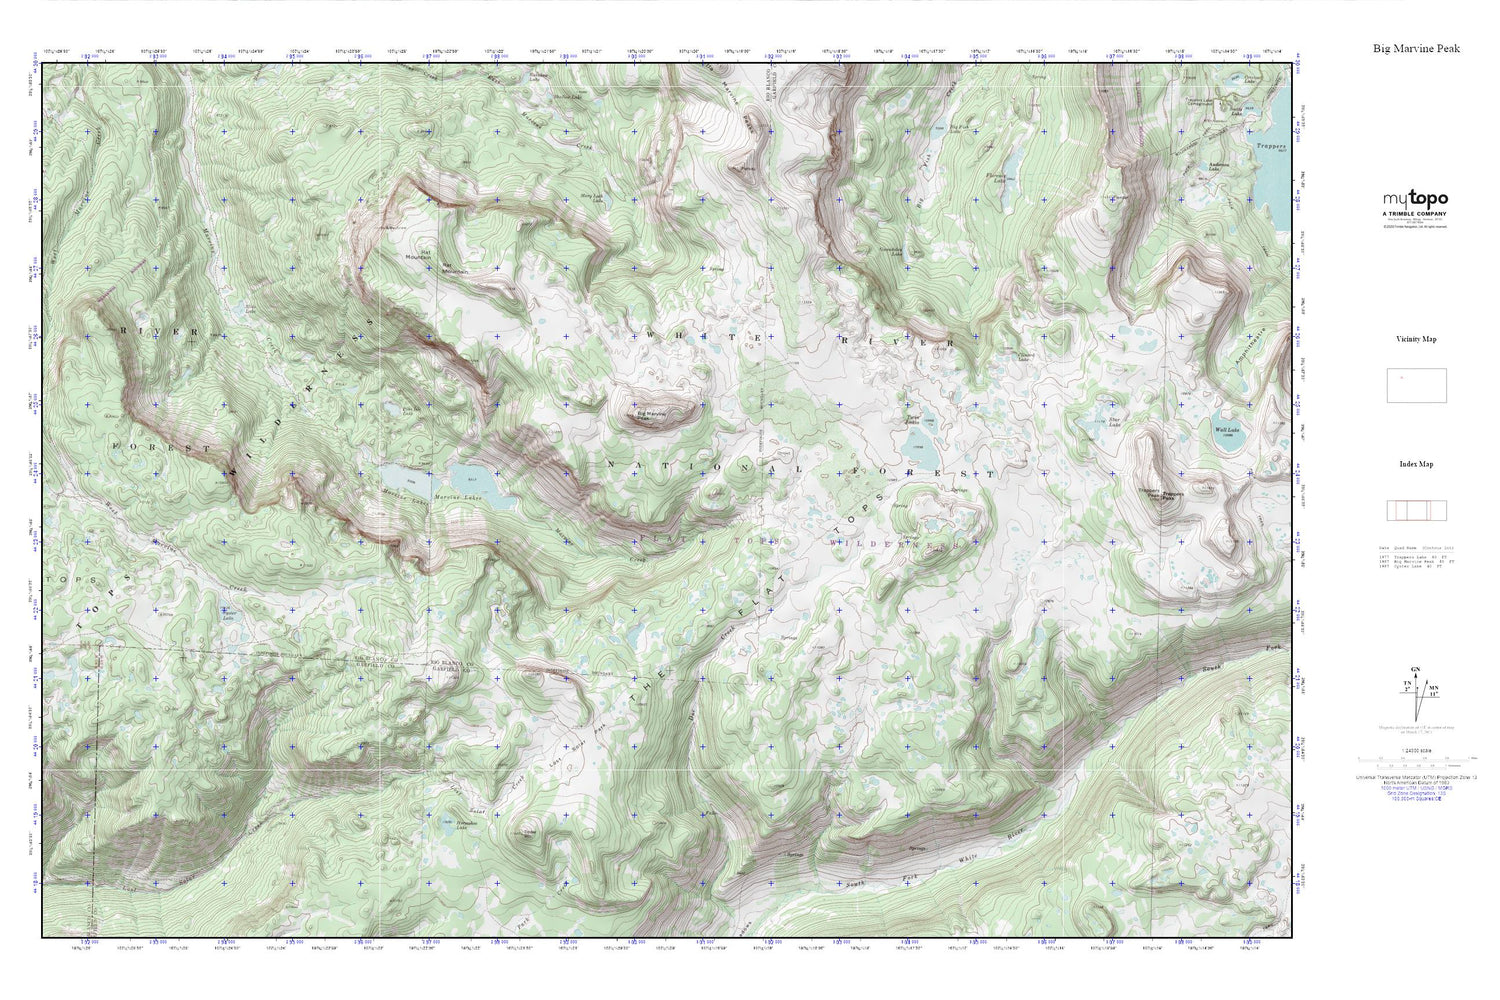 Big Marvine Peak MyTopo Explorer Series Map Image